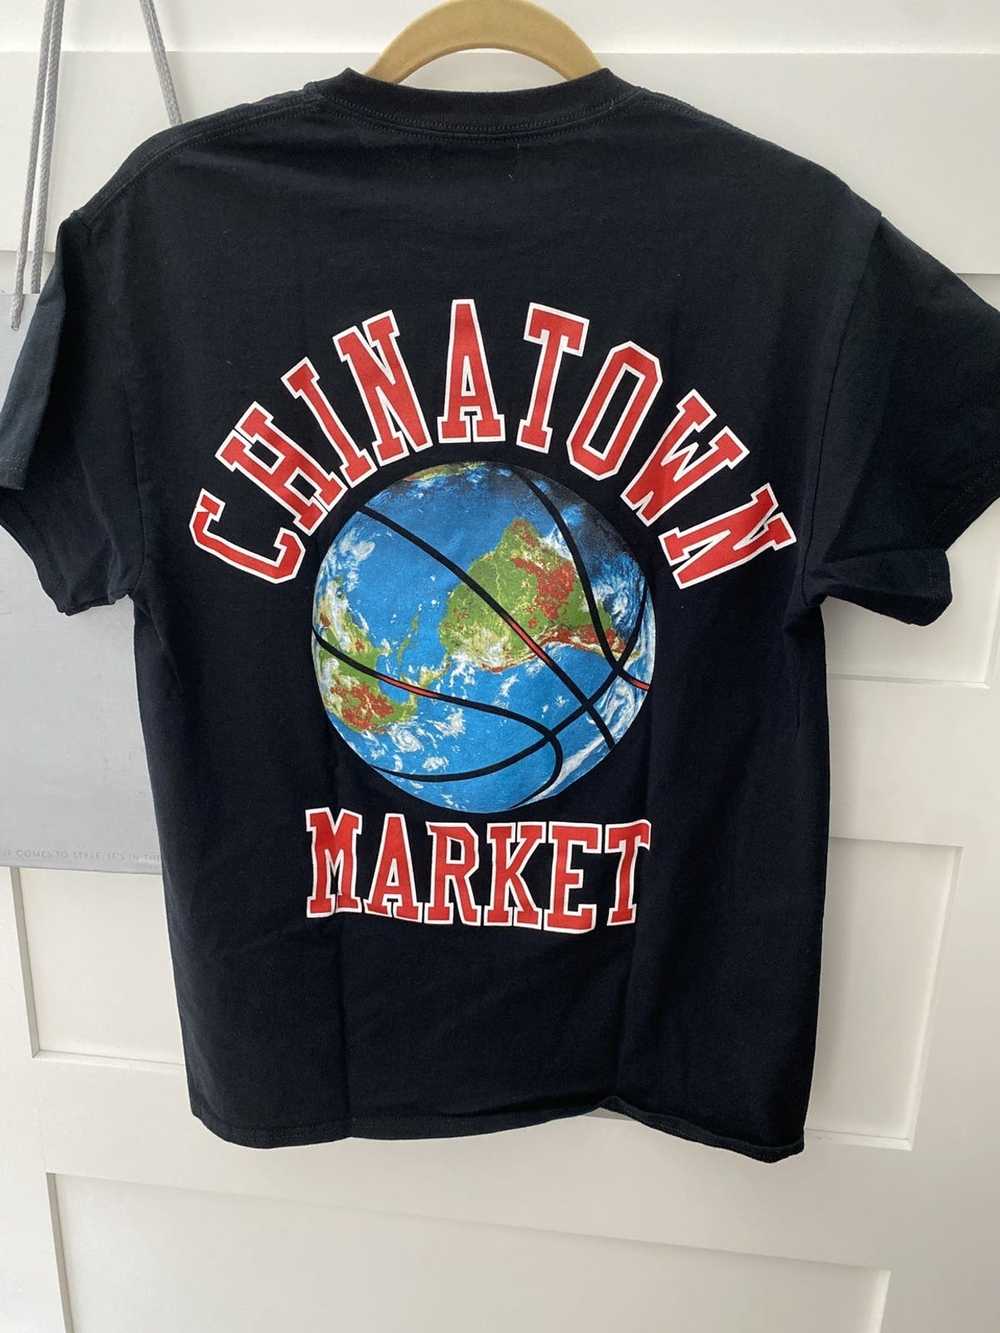 Market Chinatown market shirt - image 2